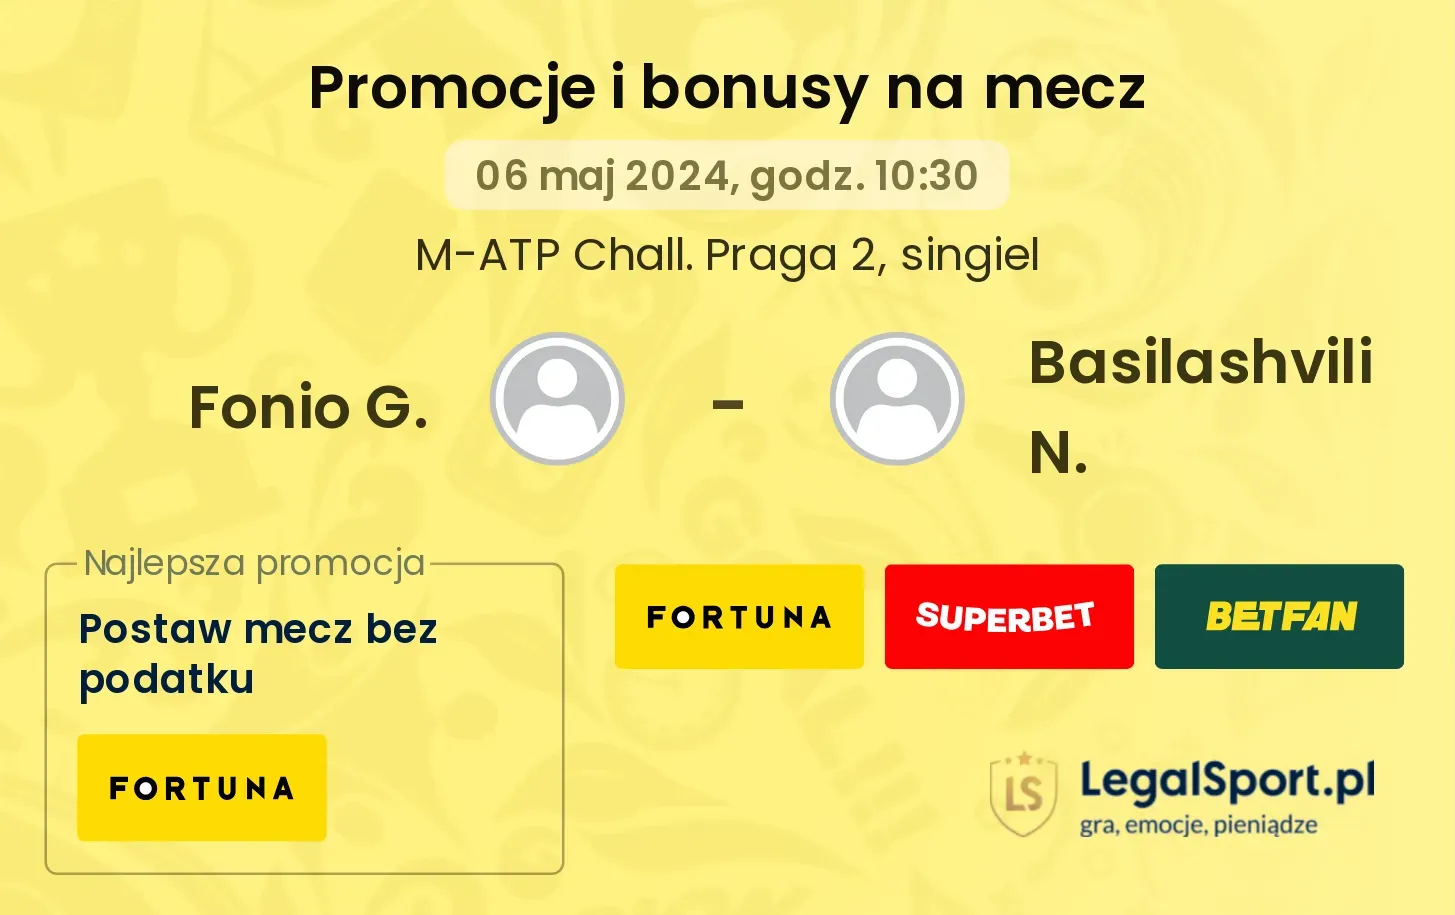 Fonio G. - Basilashvili N. promocje bonusy na mecz